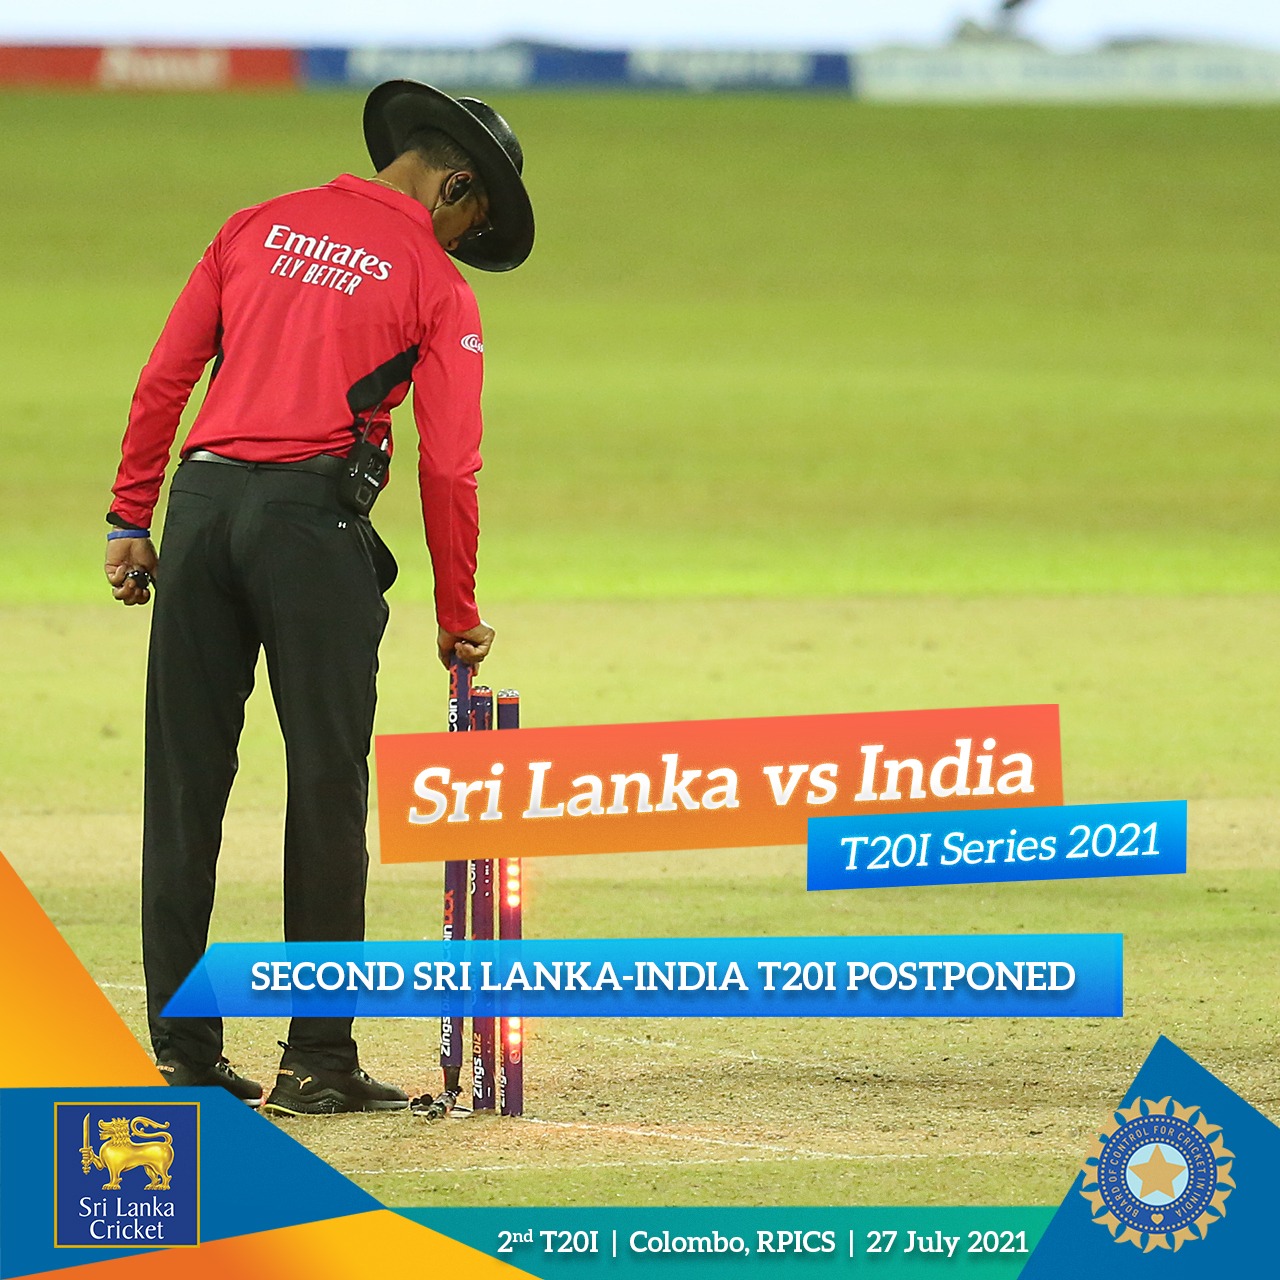 Second Sri Lanka-India T20I postponed